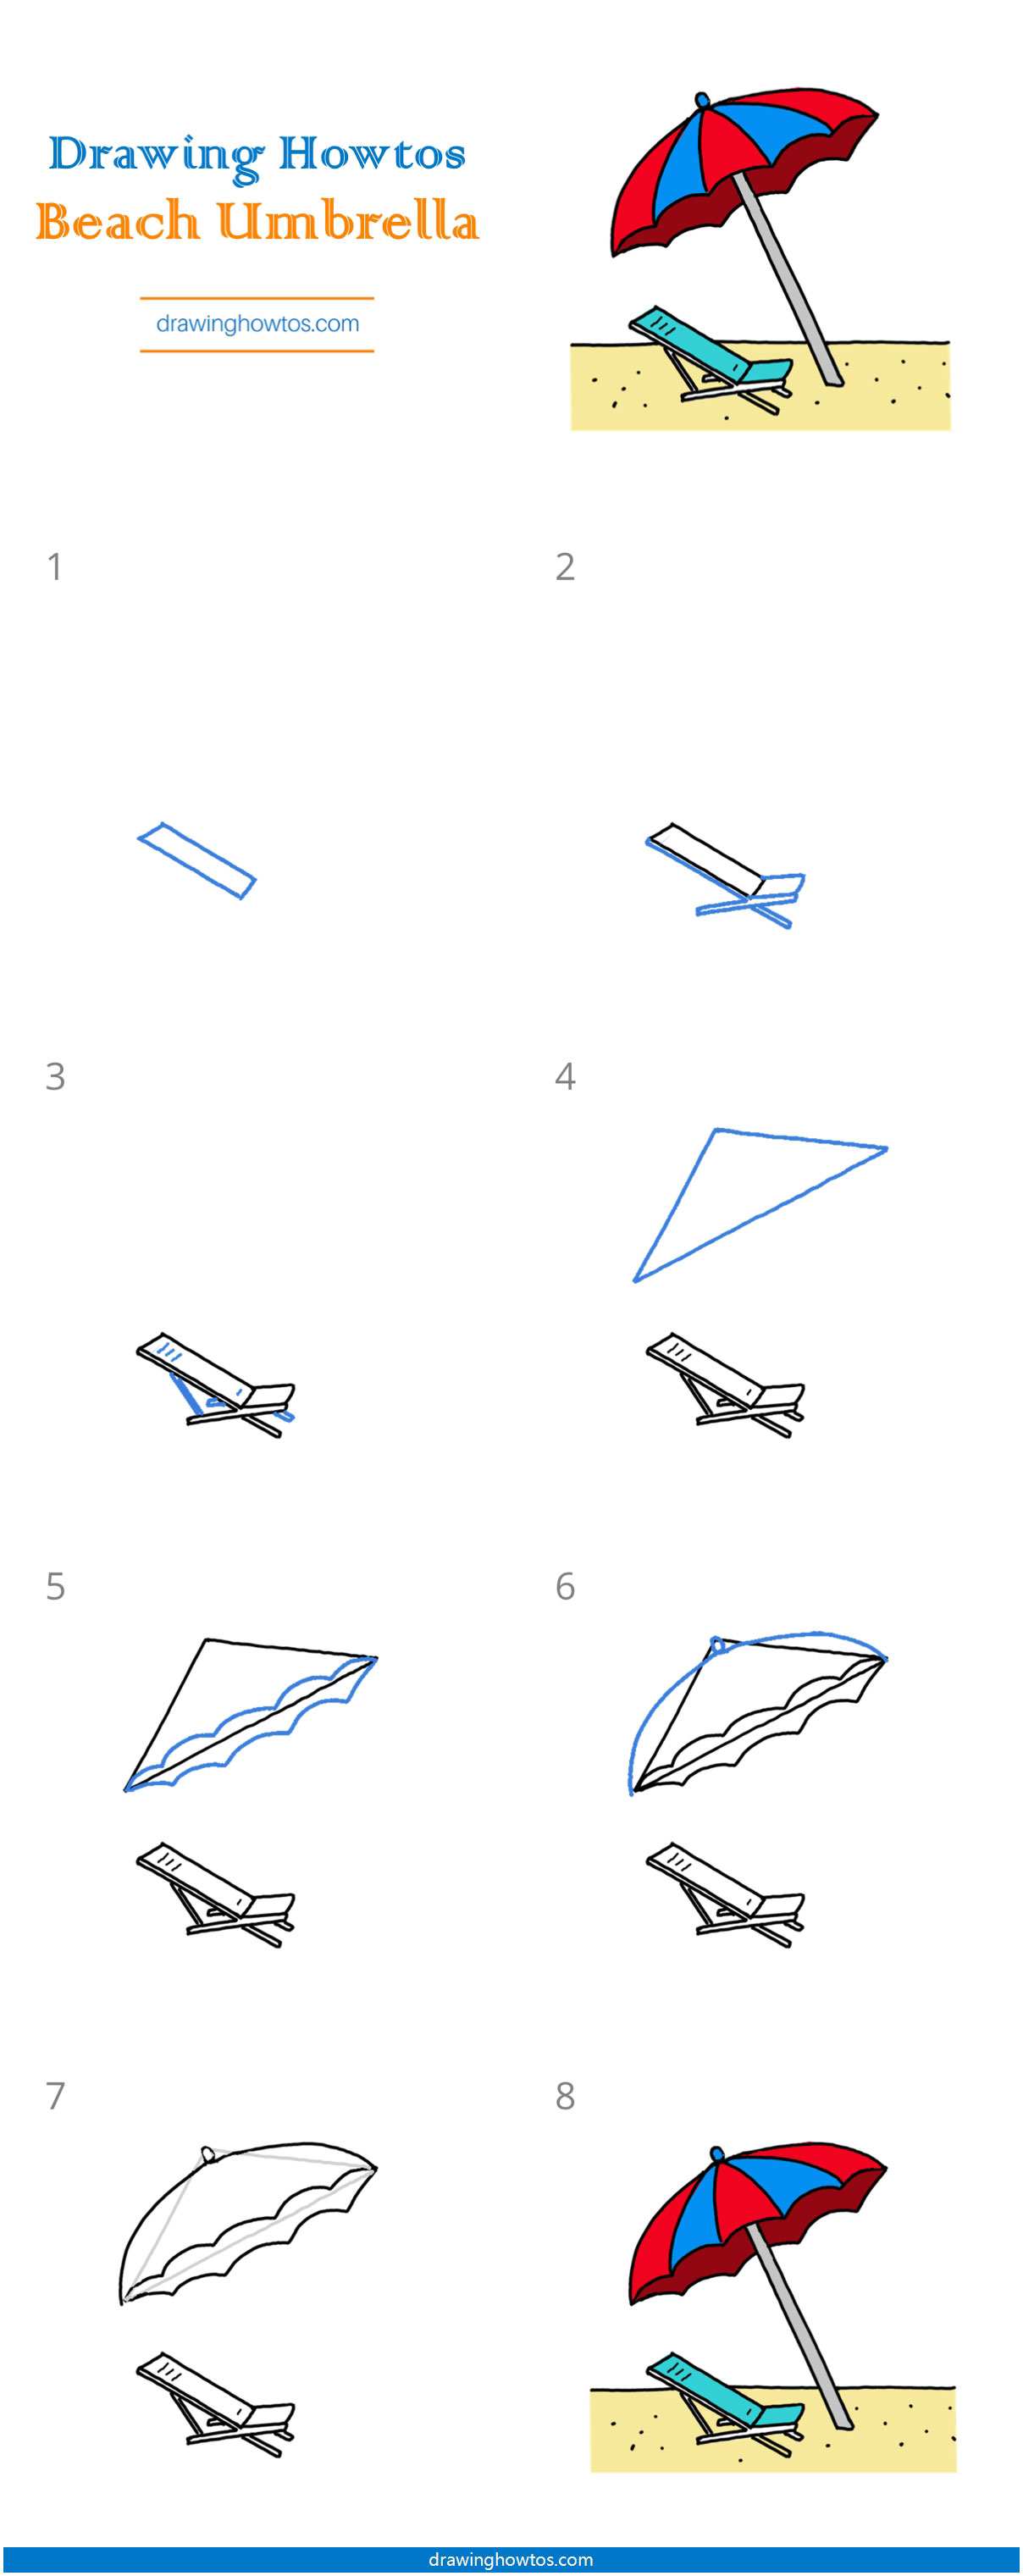 How to Draw a Beach Umbrella Step by Step